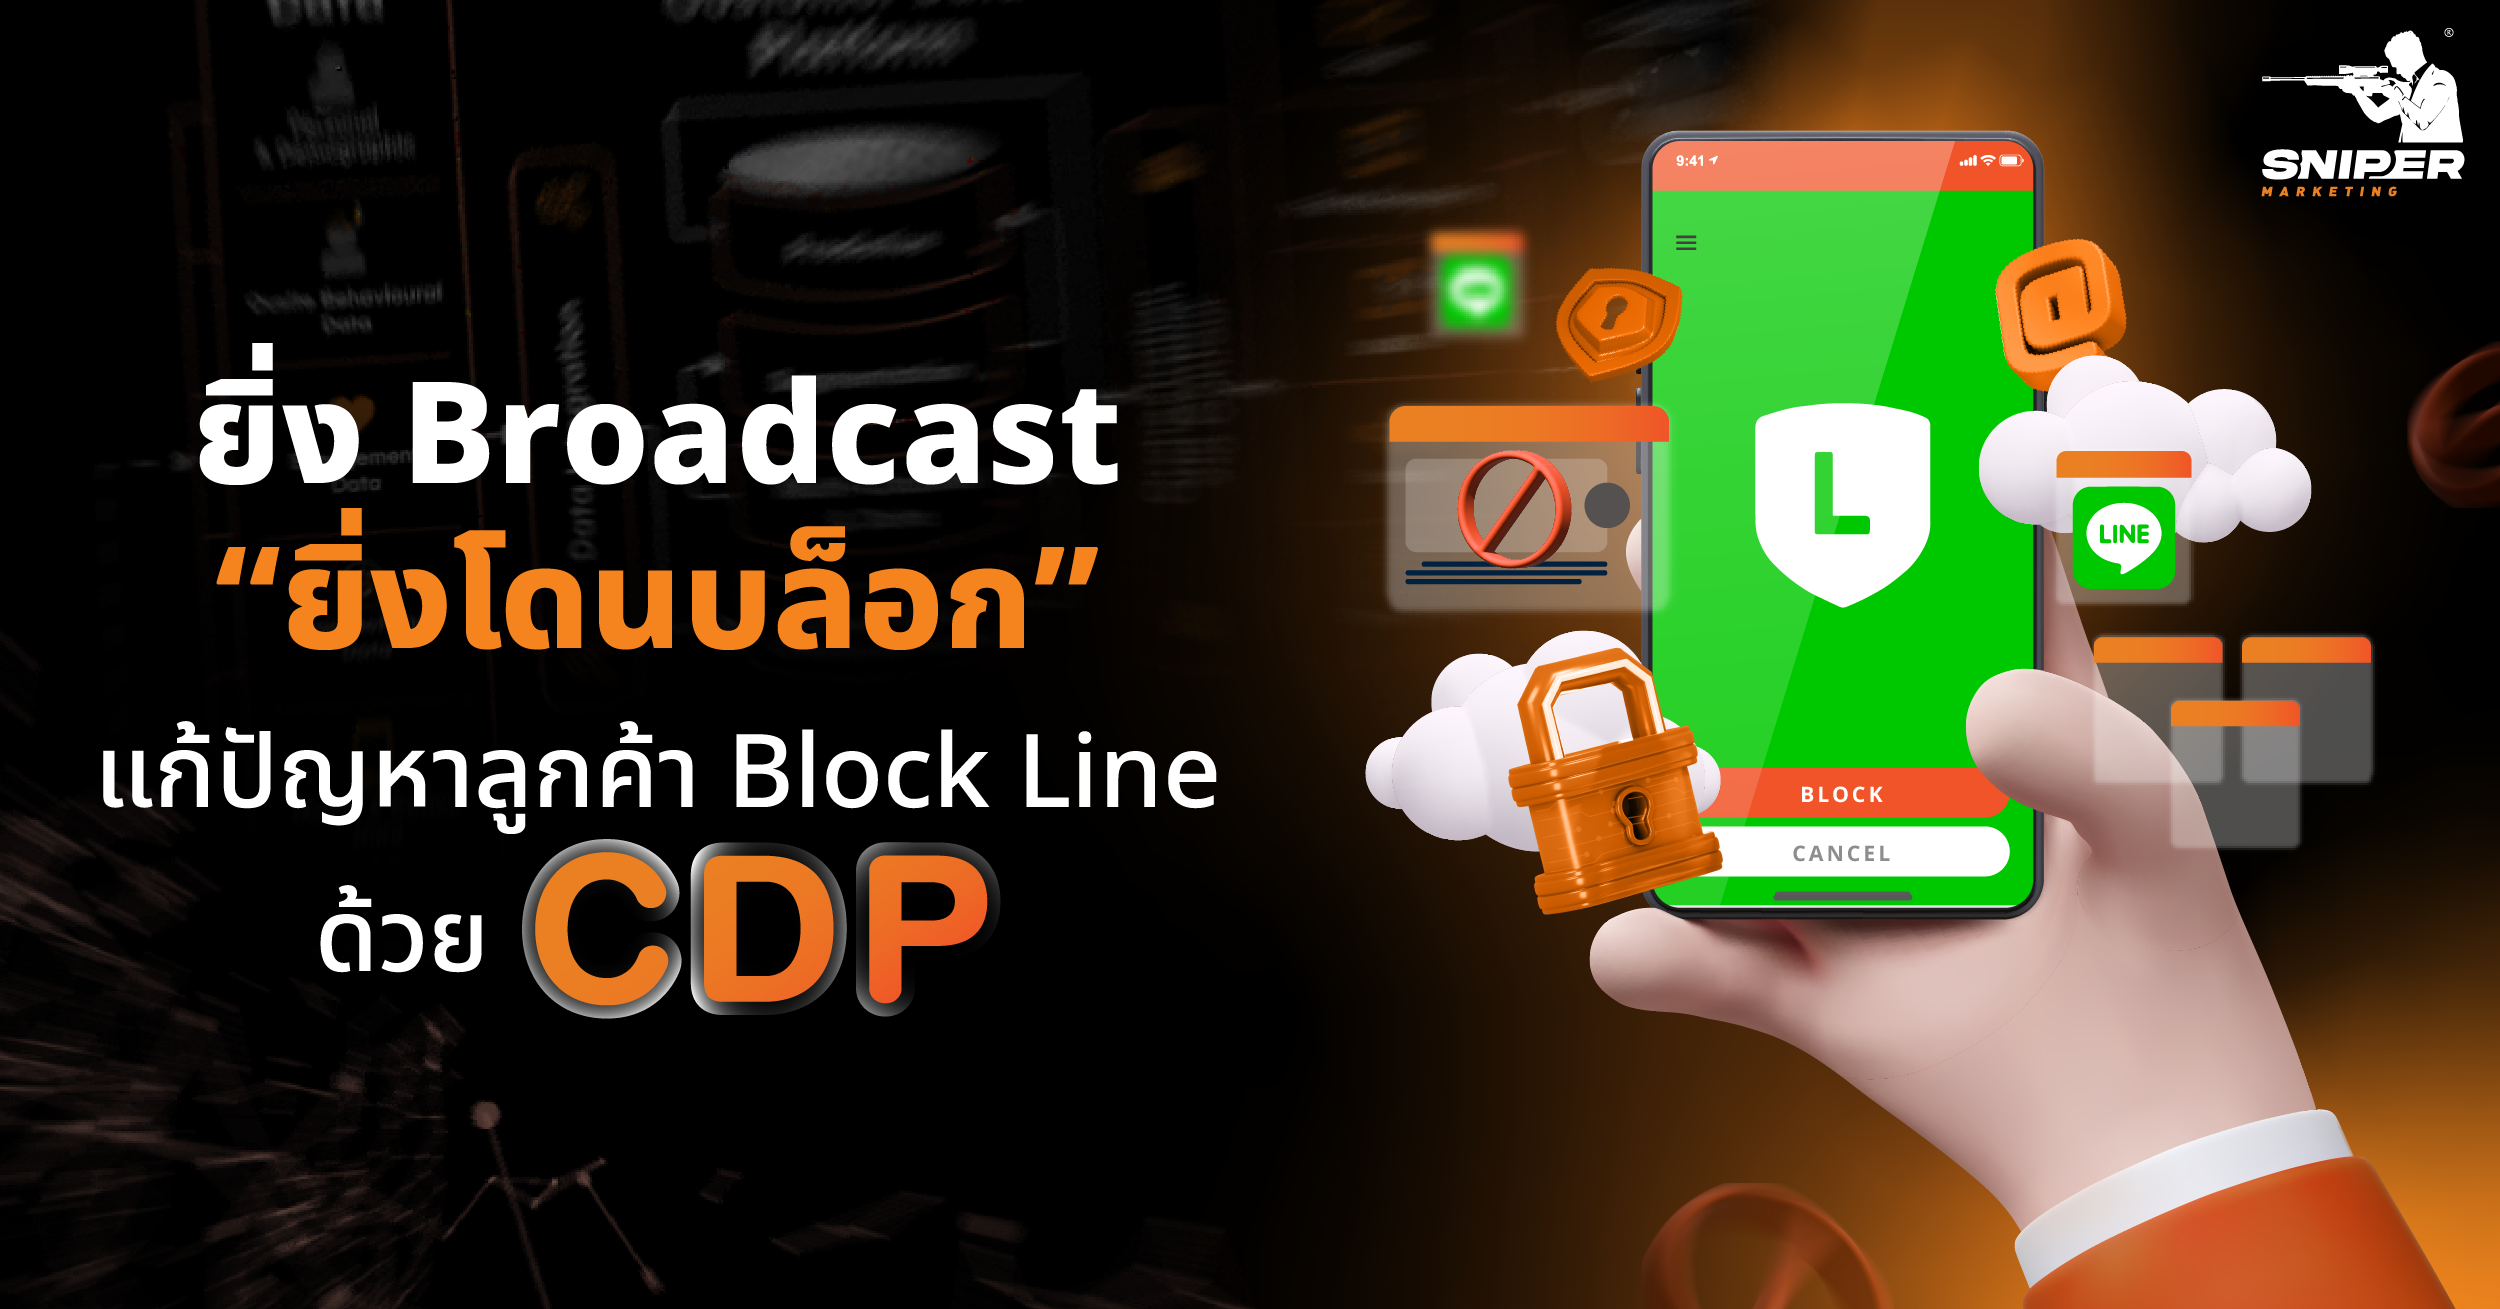 CDP helps Block